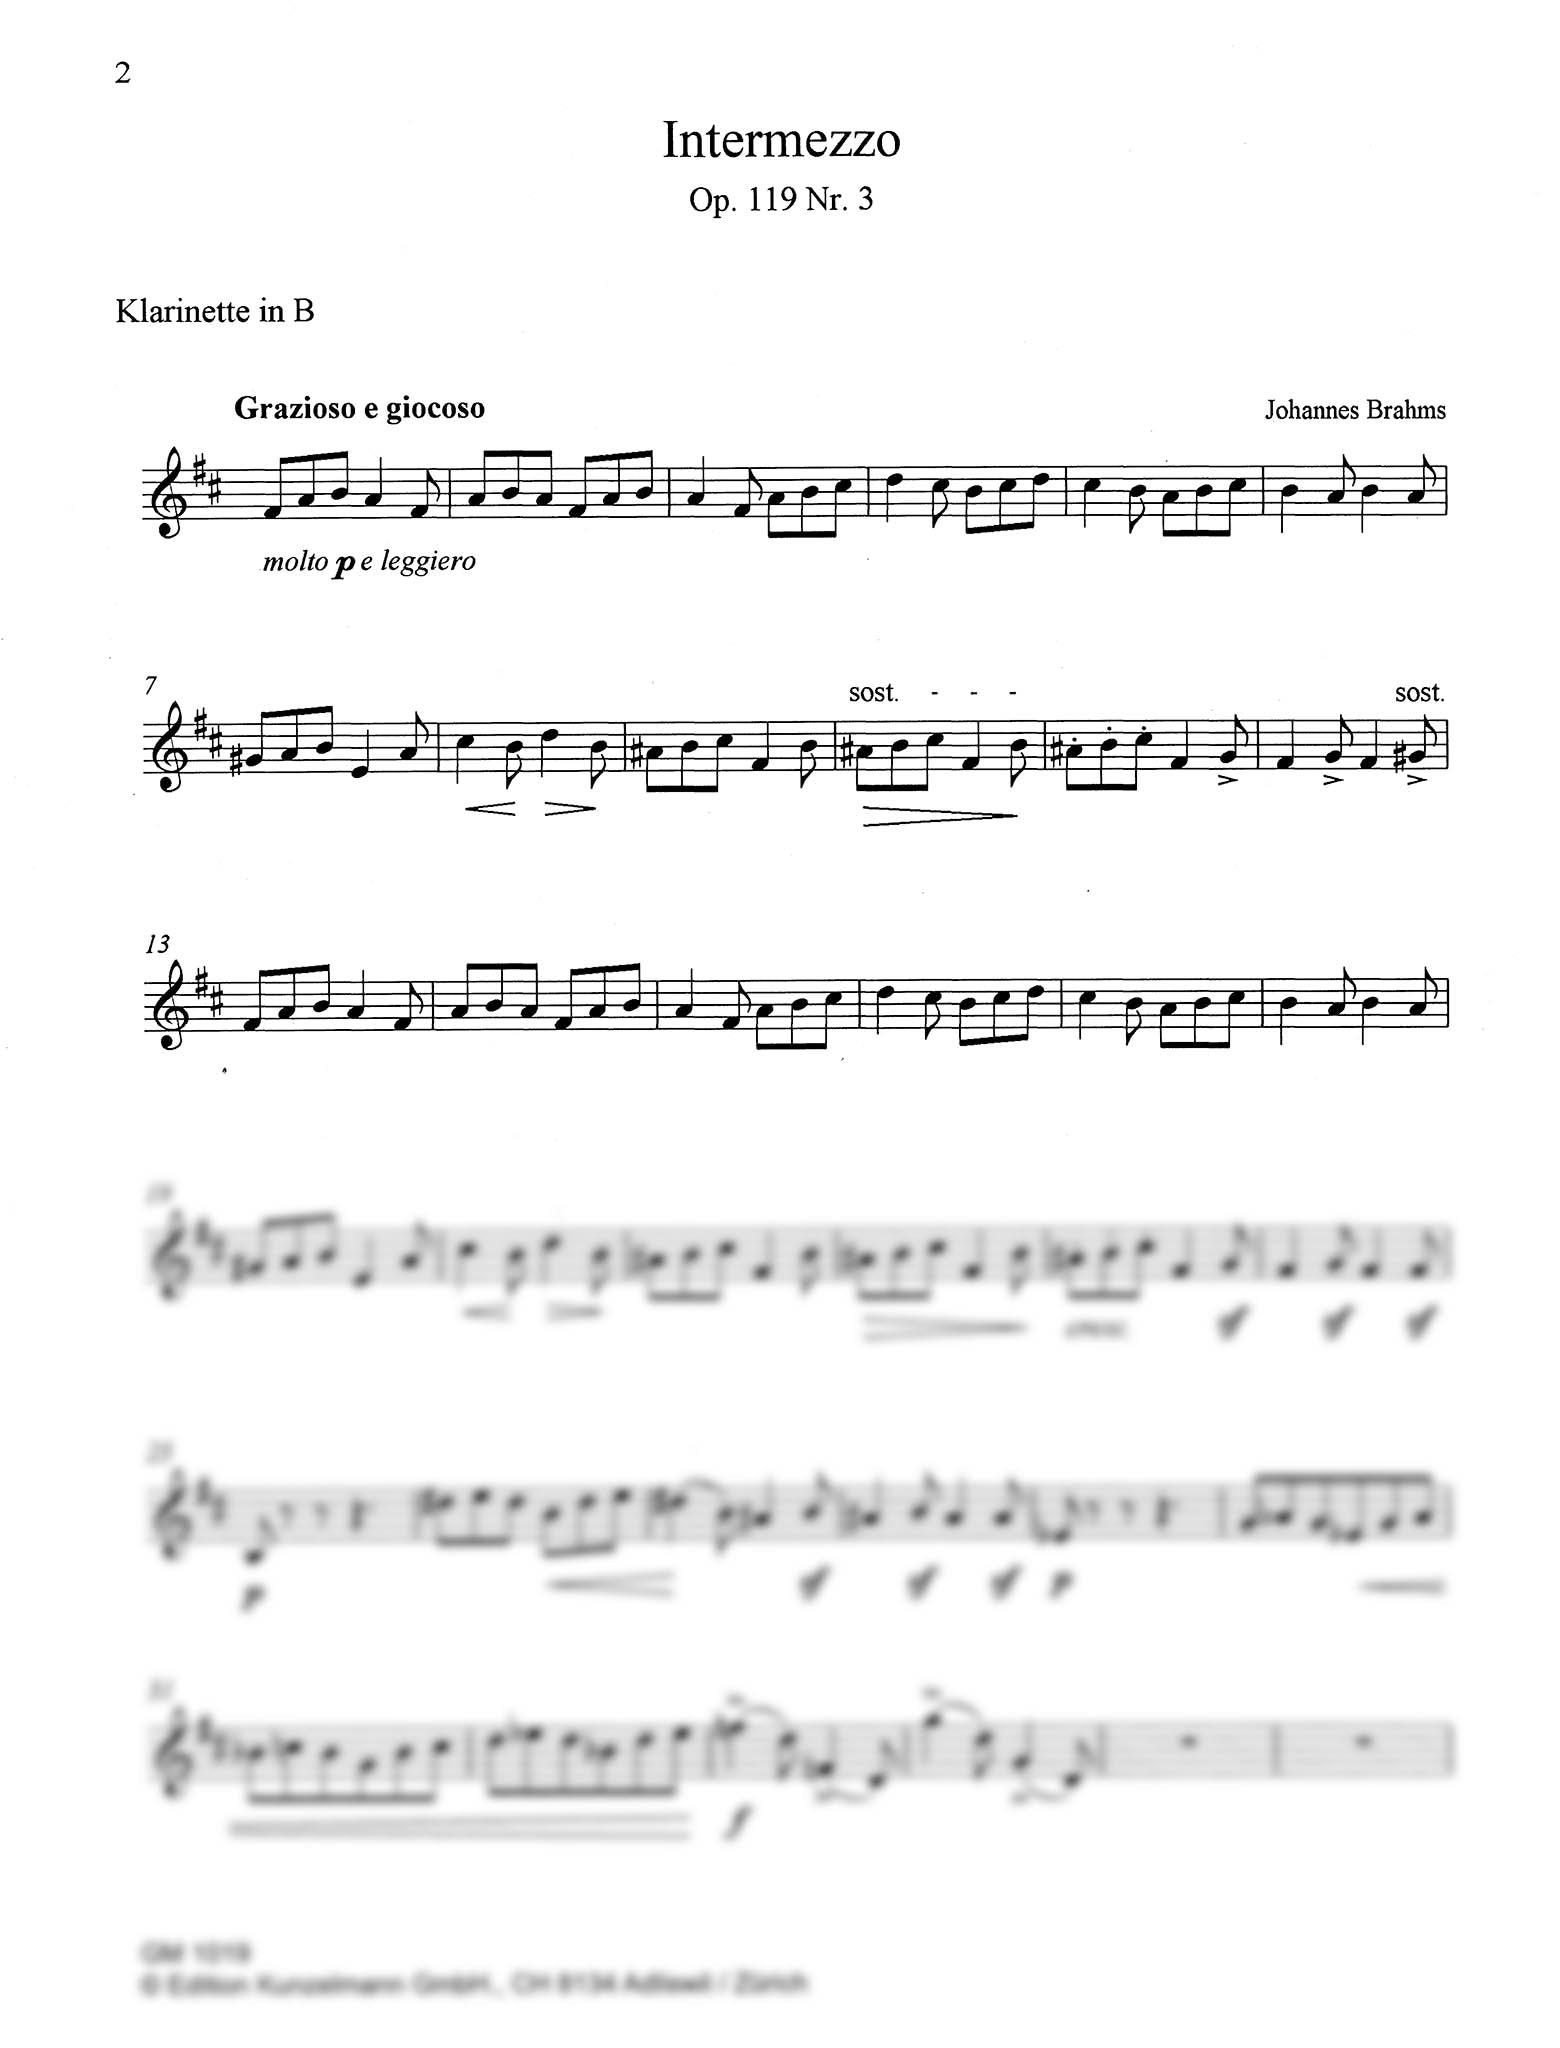 Intermezzo, Op. 119 No. 3 Clarinet part